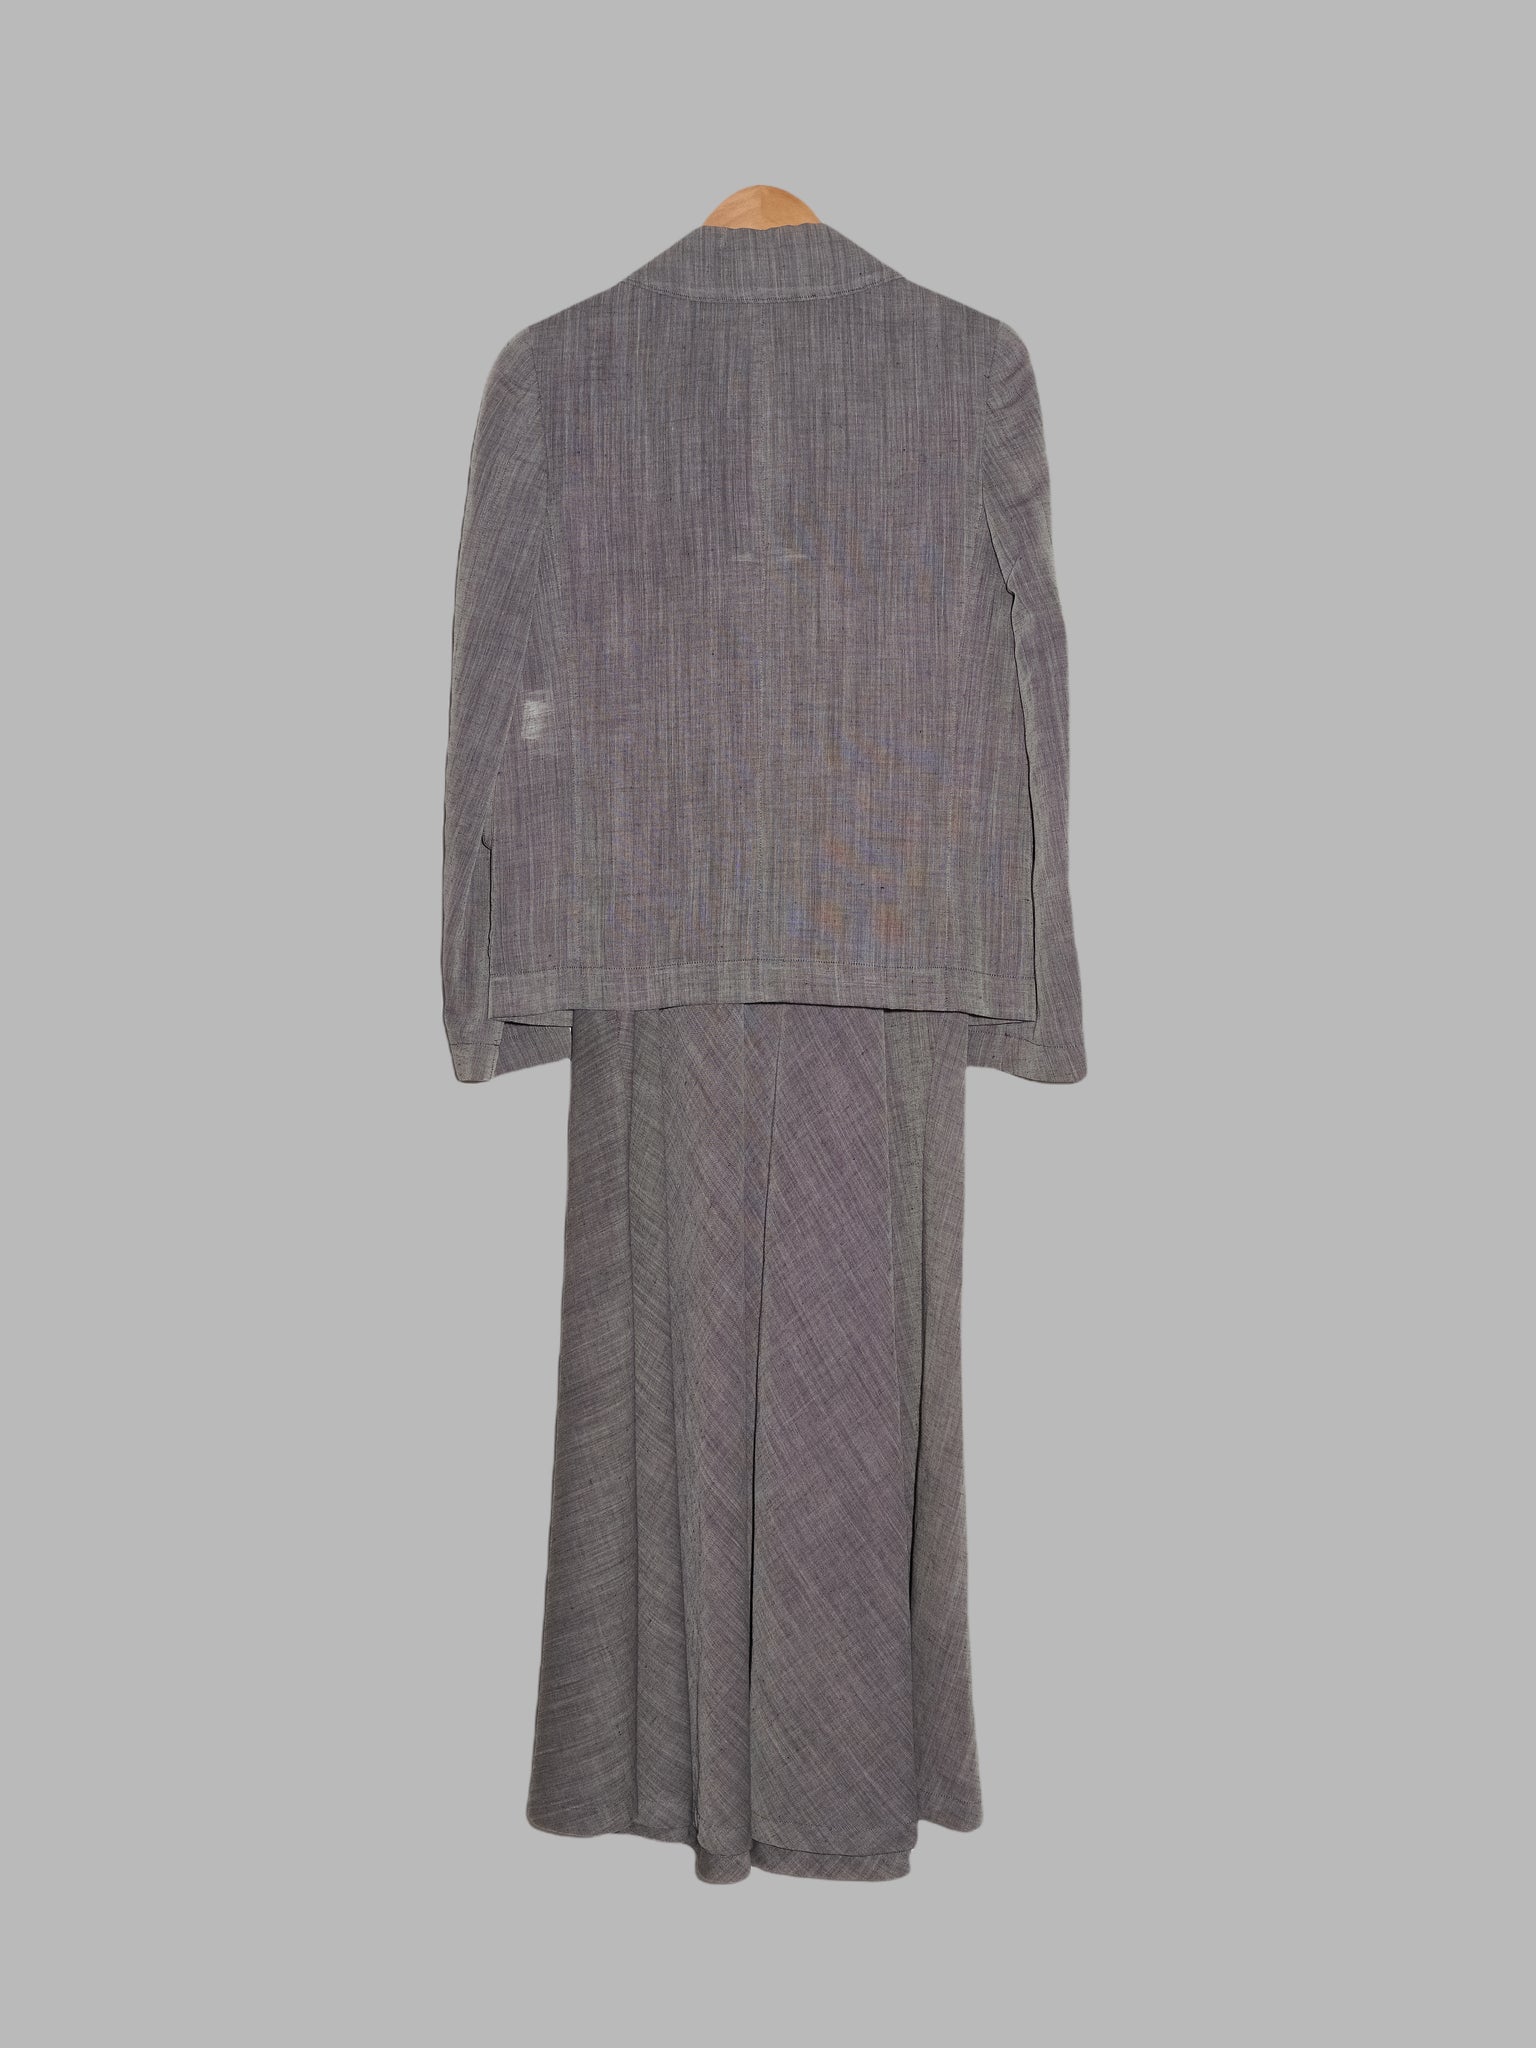 Tricot Comme des Garcons 1995 grey linen-wool dress and jacket suit